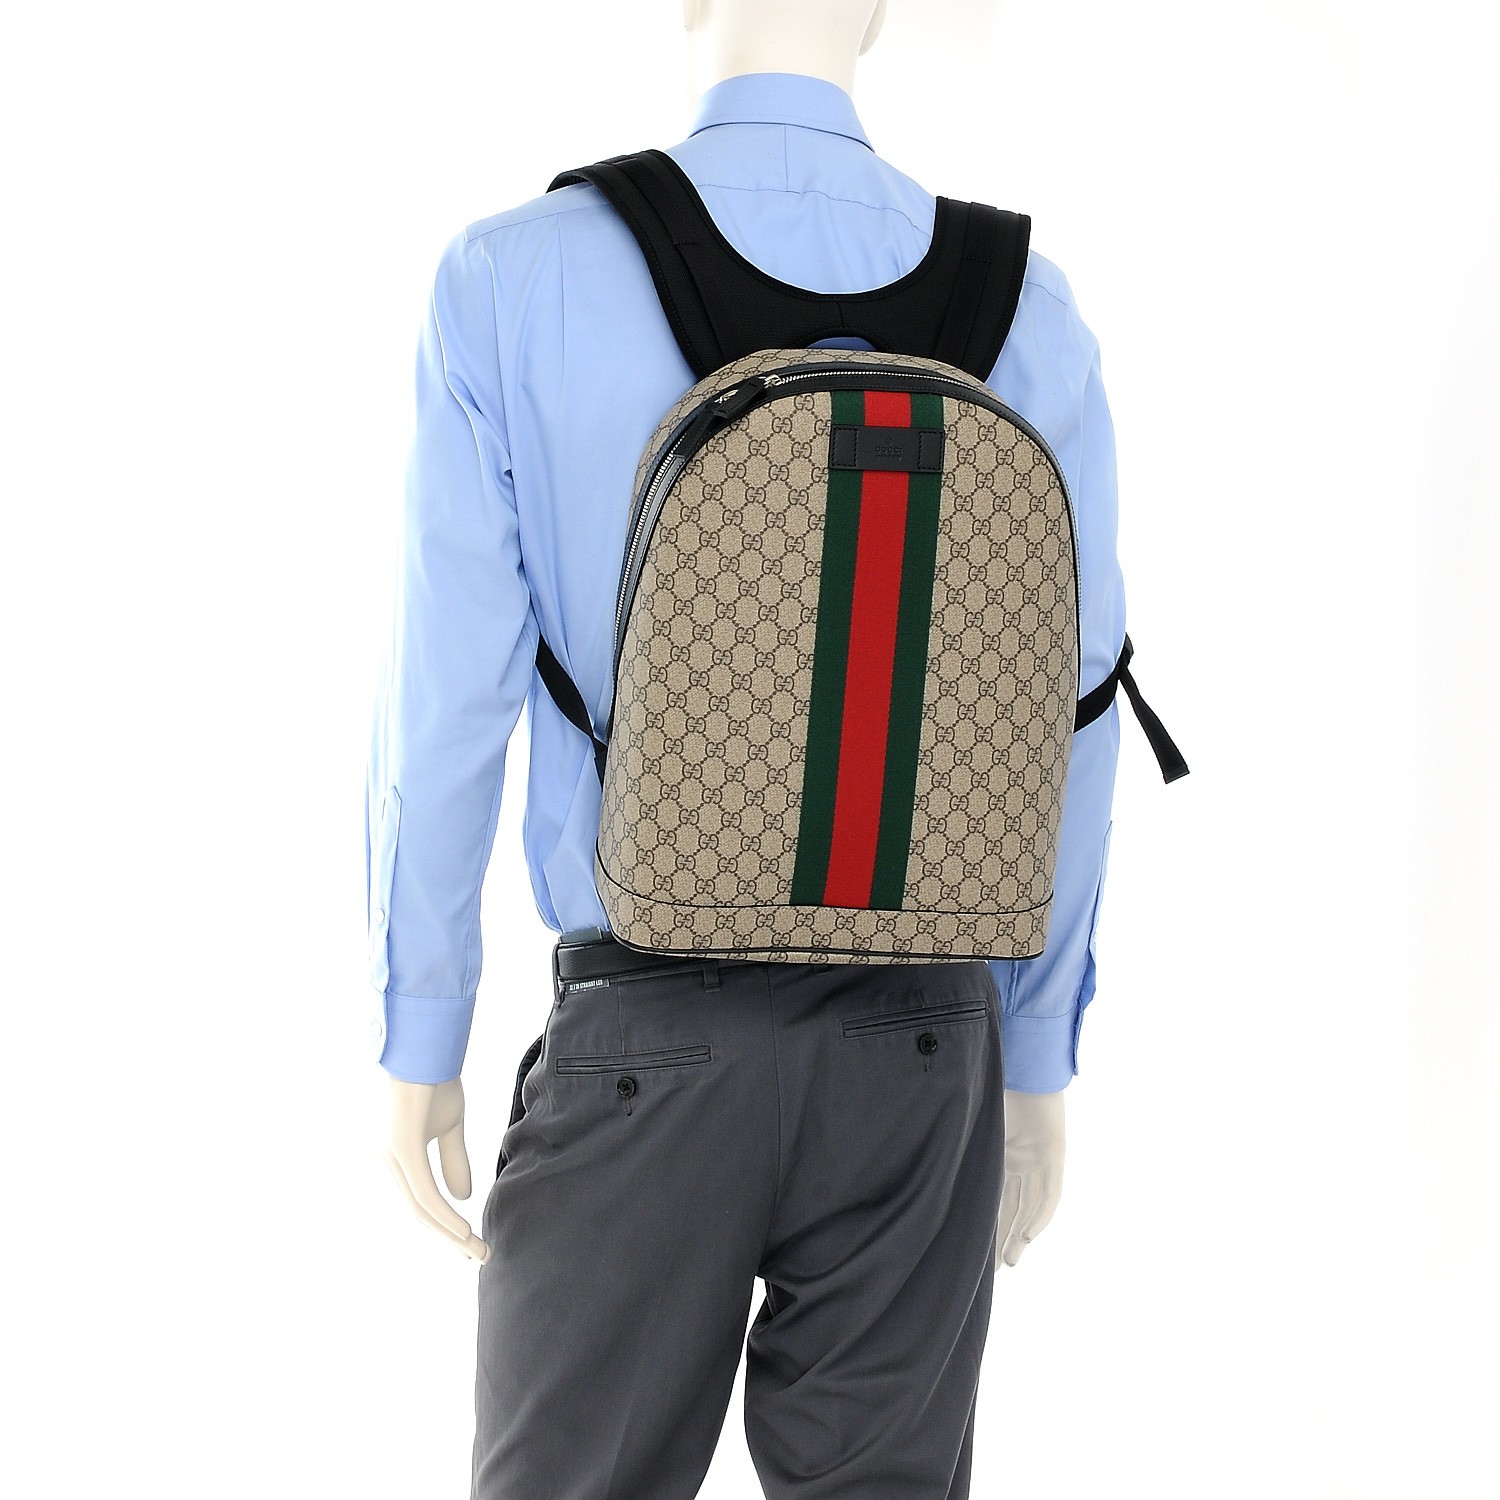 gucci web backpack